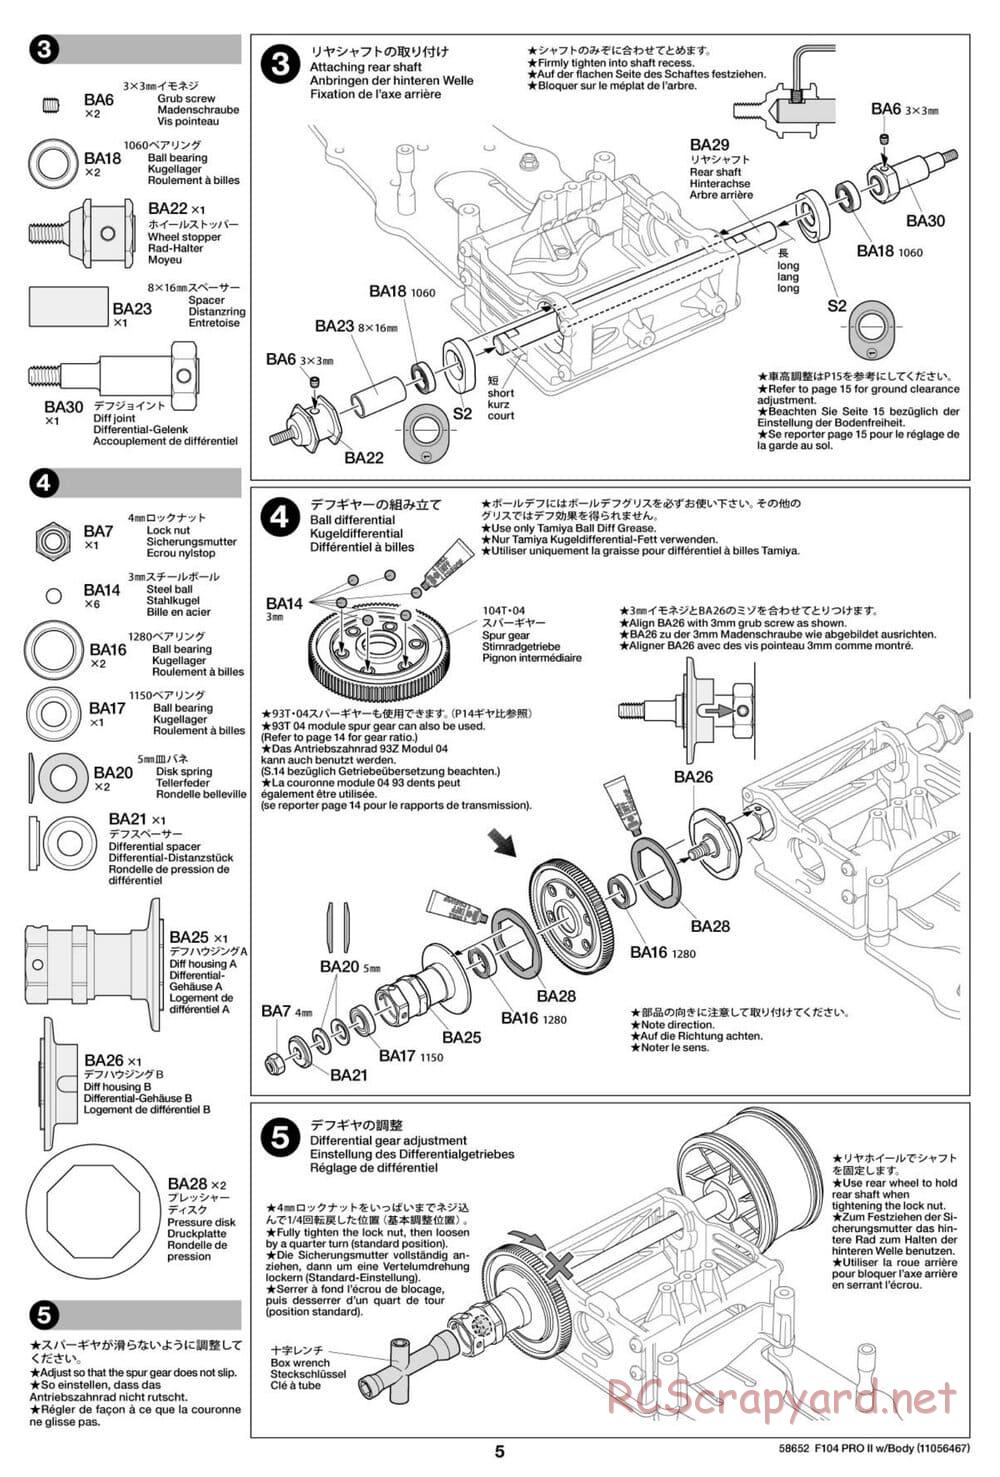 Tamiya - F104 Pro II Chassis - Manual - Page 5